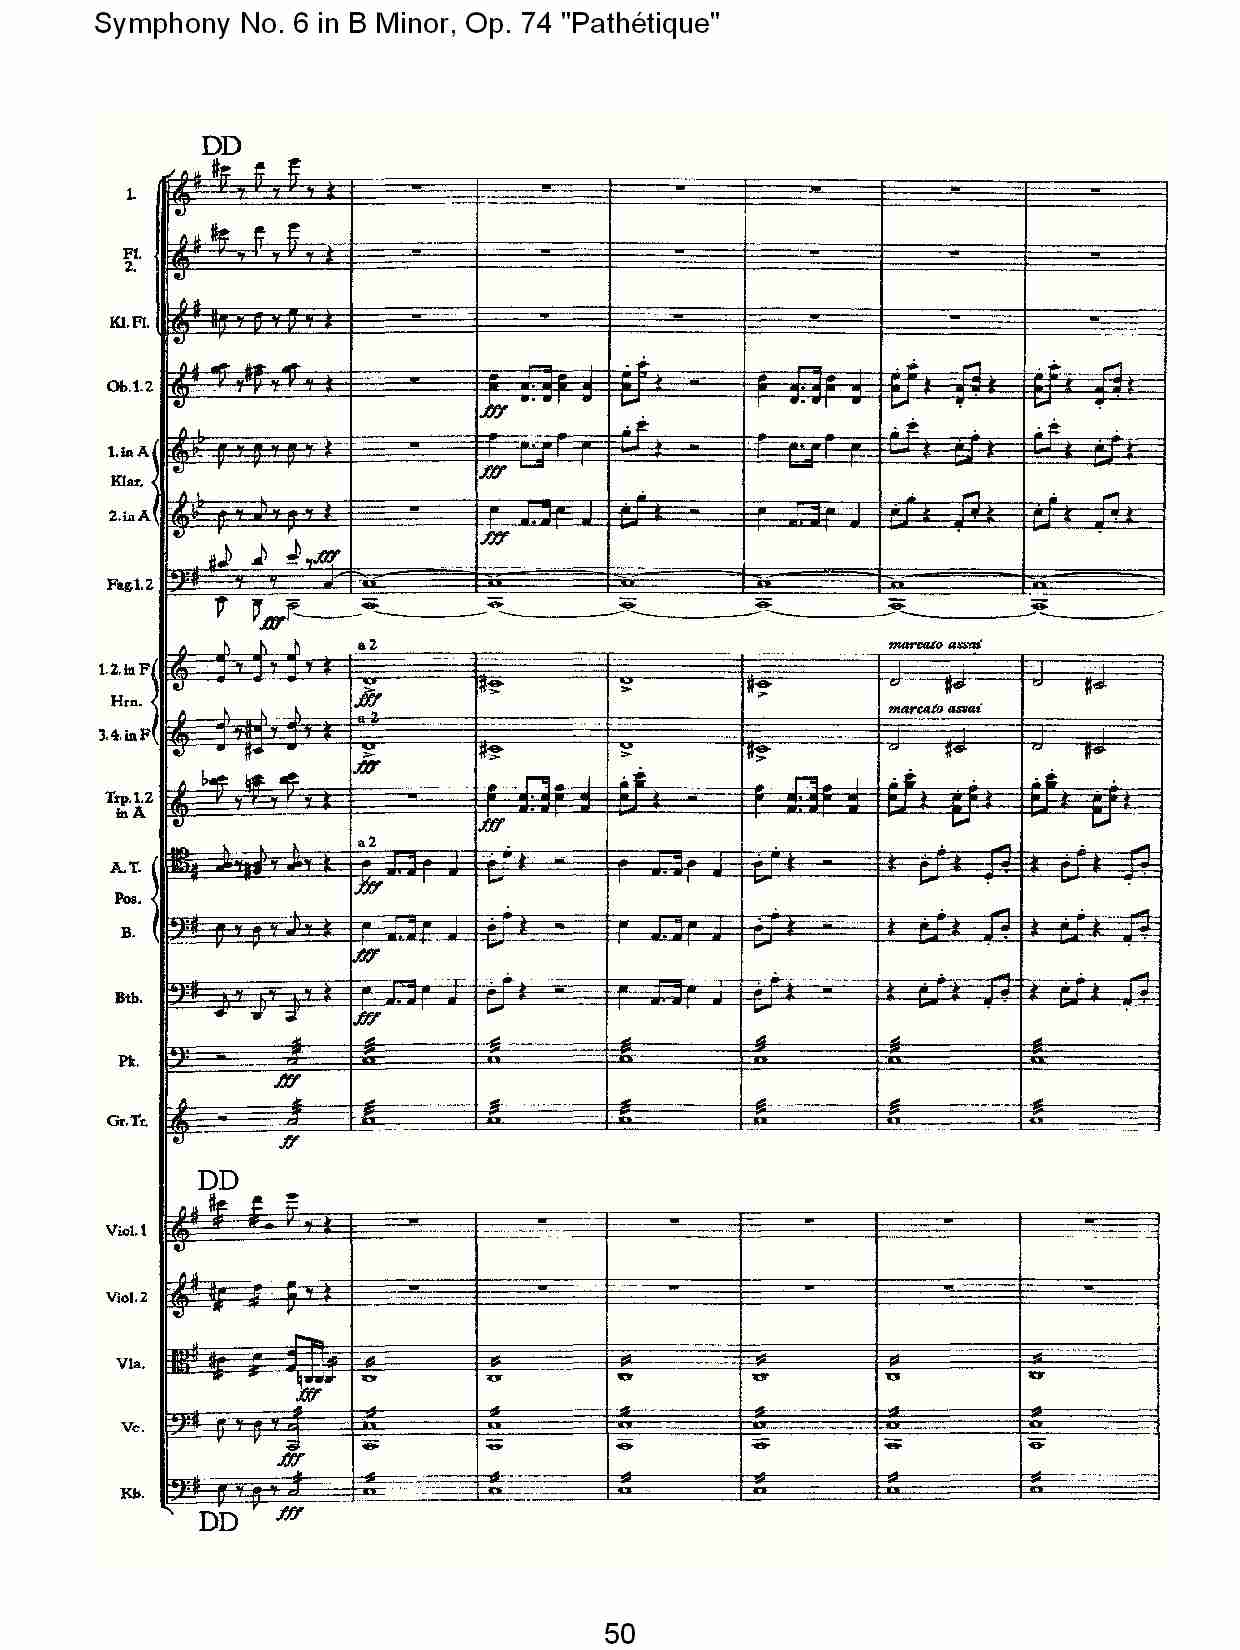 Symphony No. 6 in B Minor, Op.74 